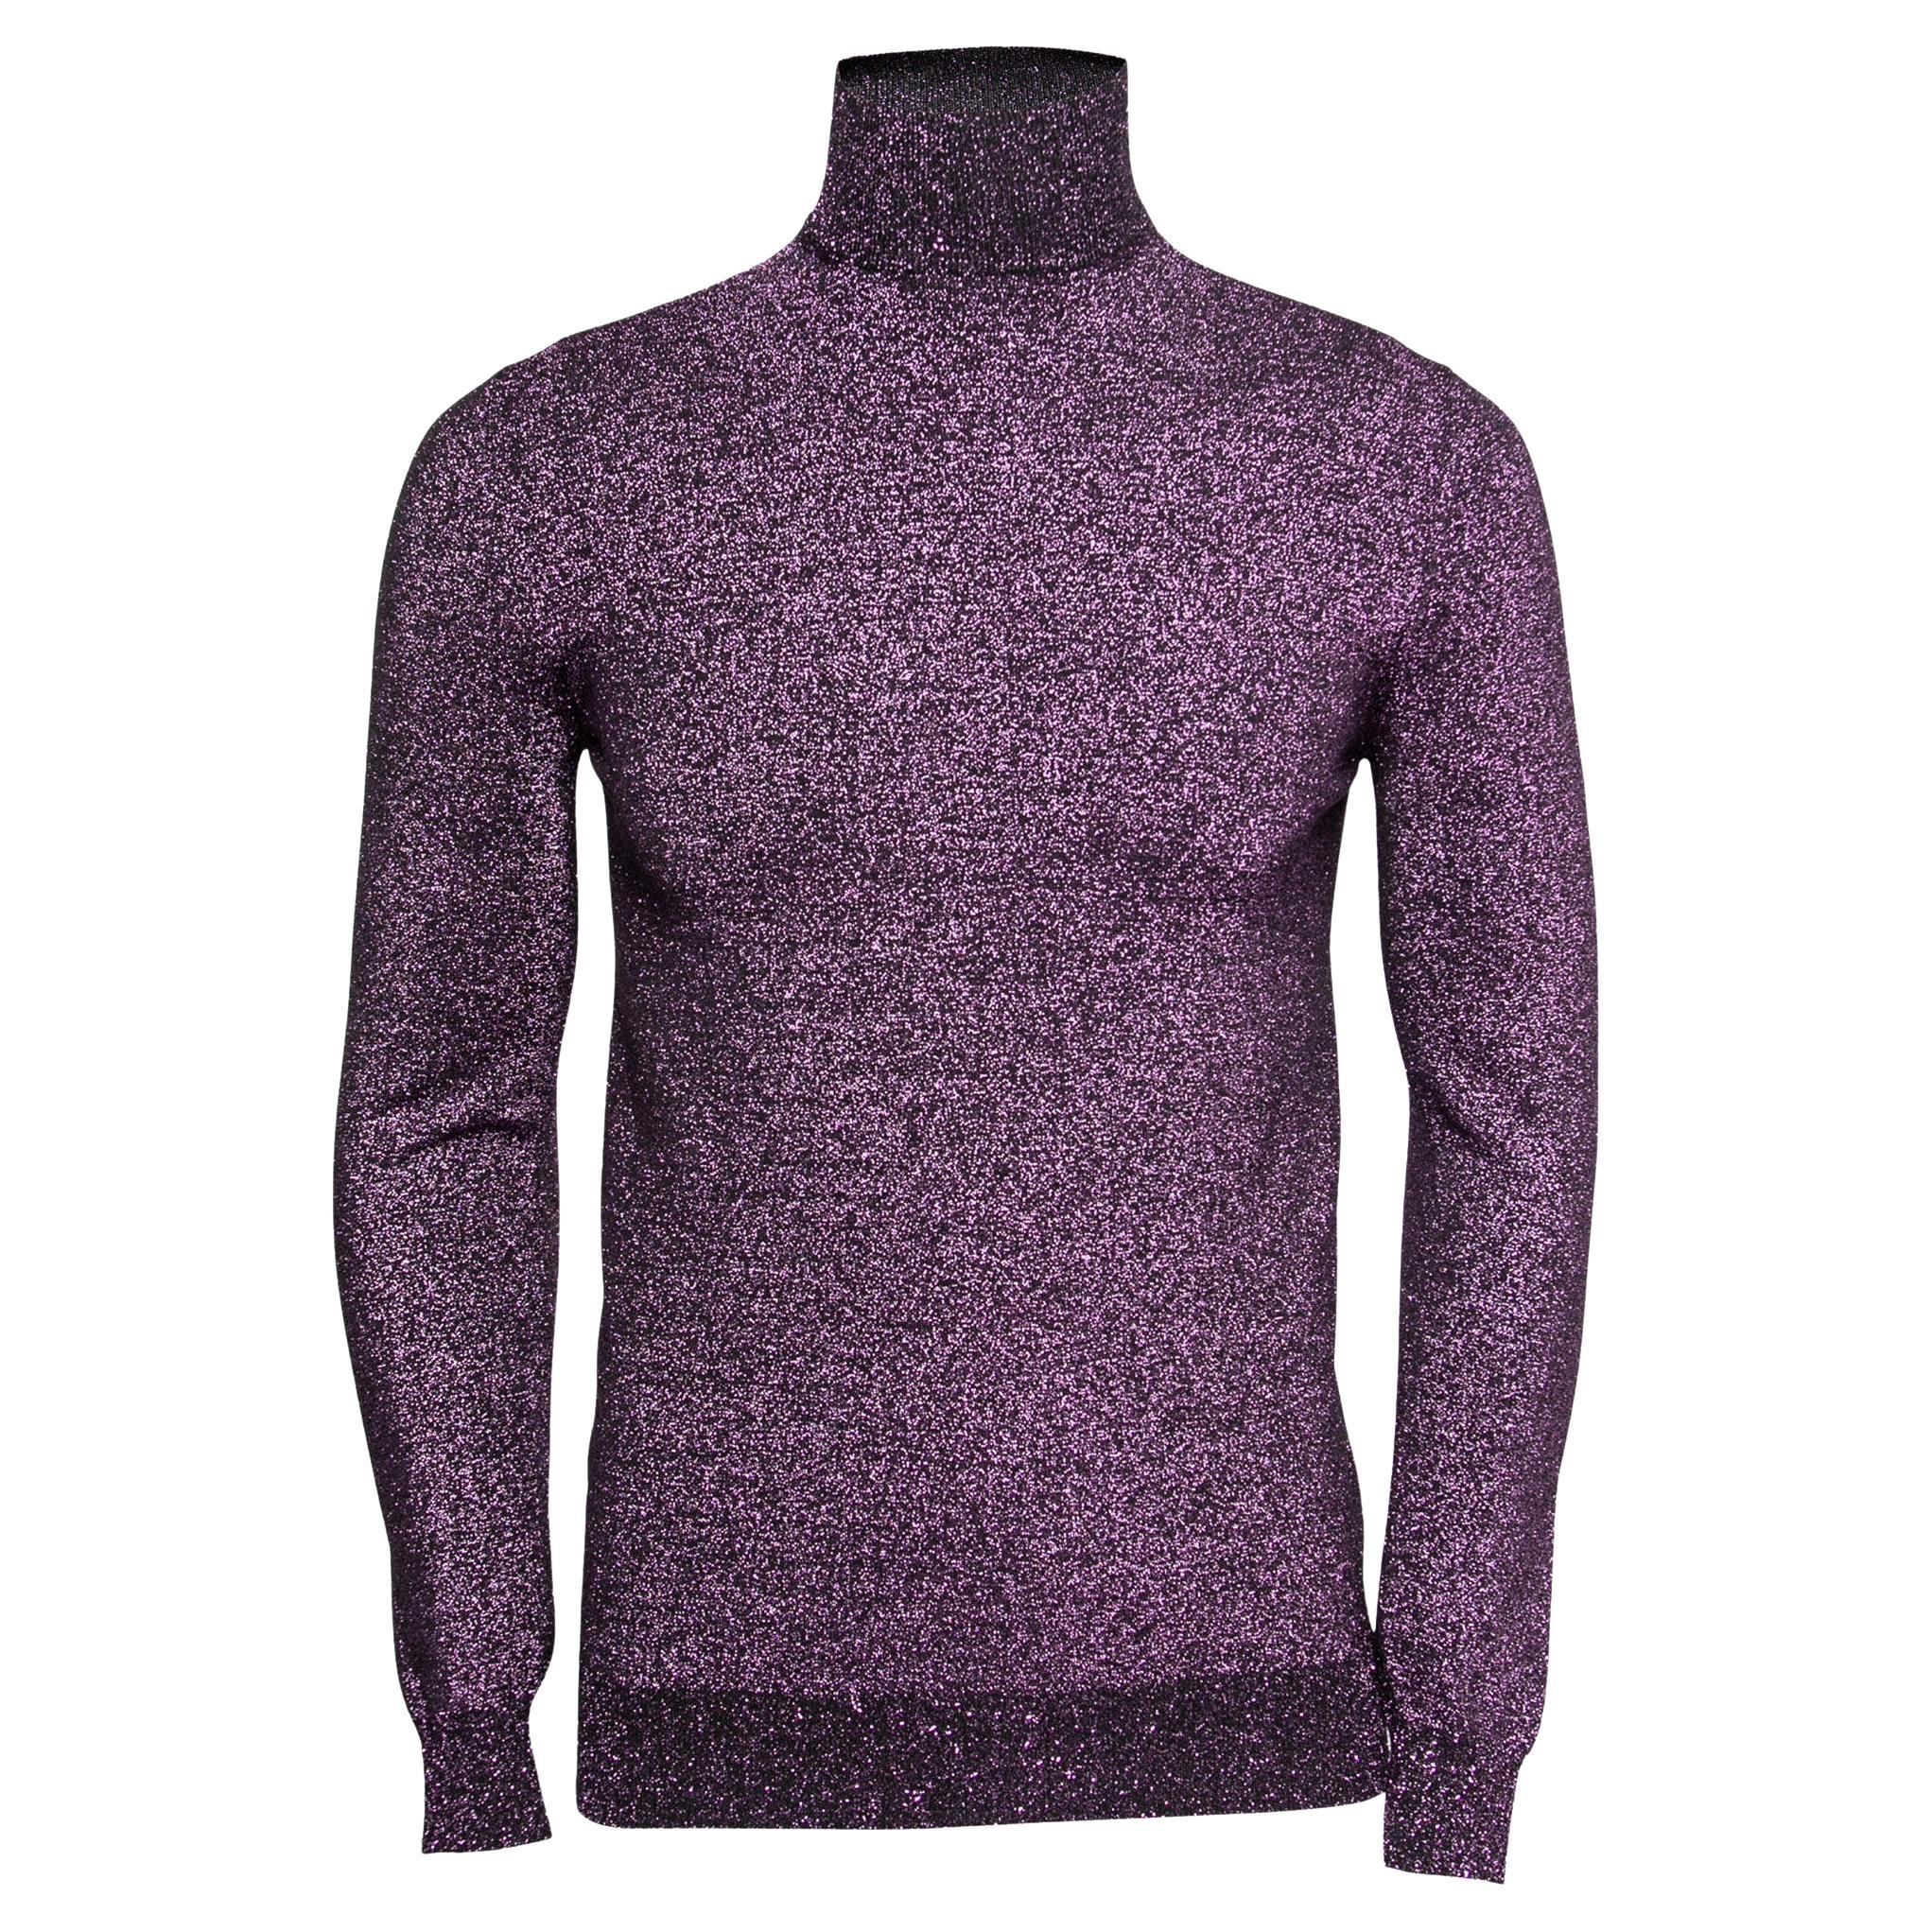 Prada Metallic Purple Lurex Knit Turtle Neck Long Sleeve Sweater L